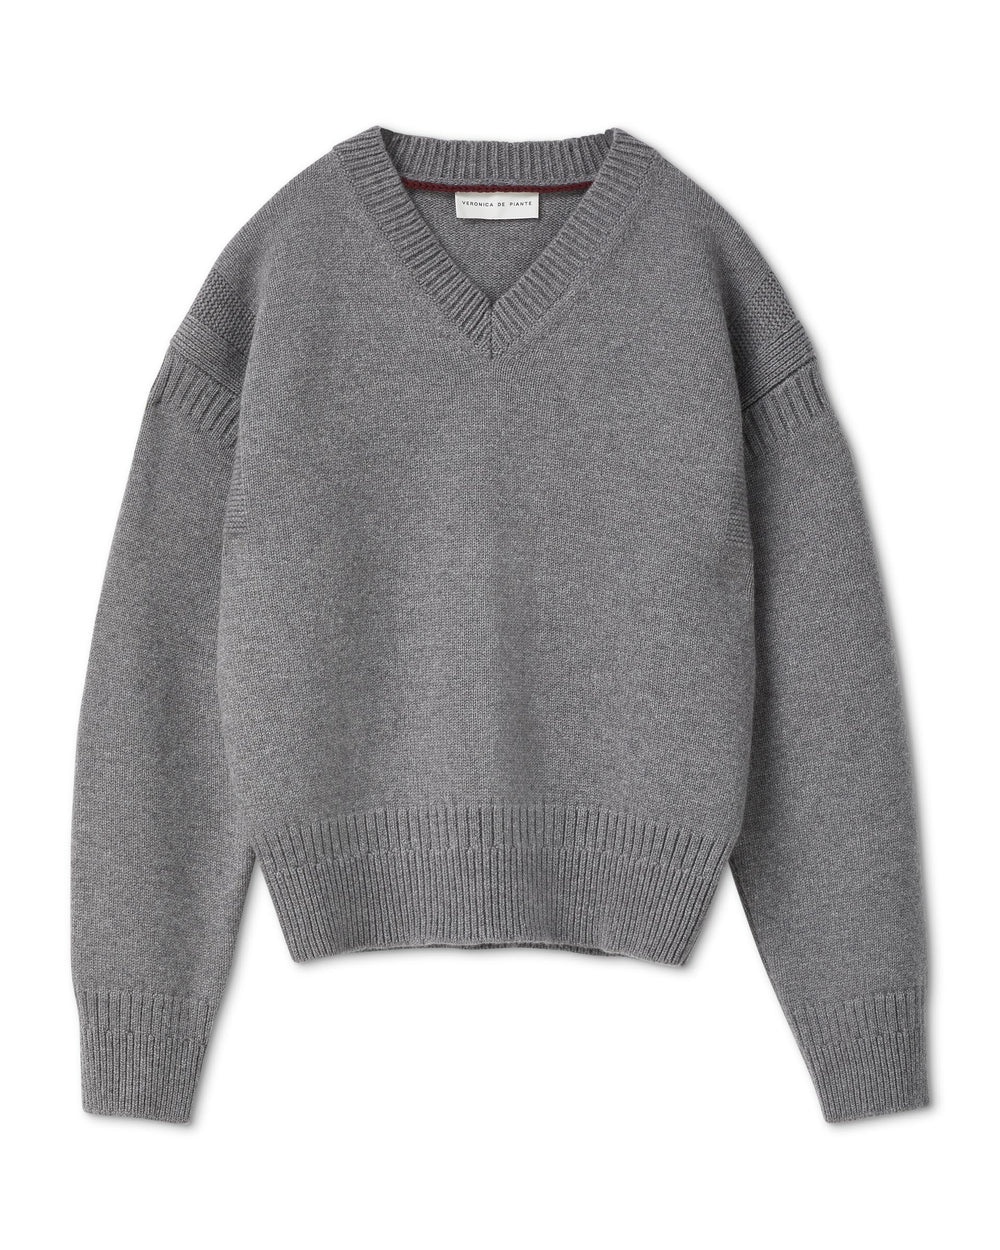 Poppy Sweater in Wool Cashmere, Grey Melange